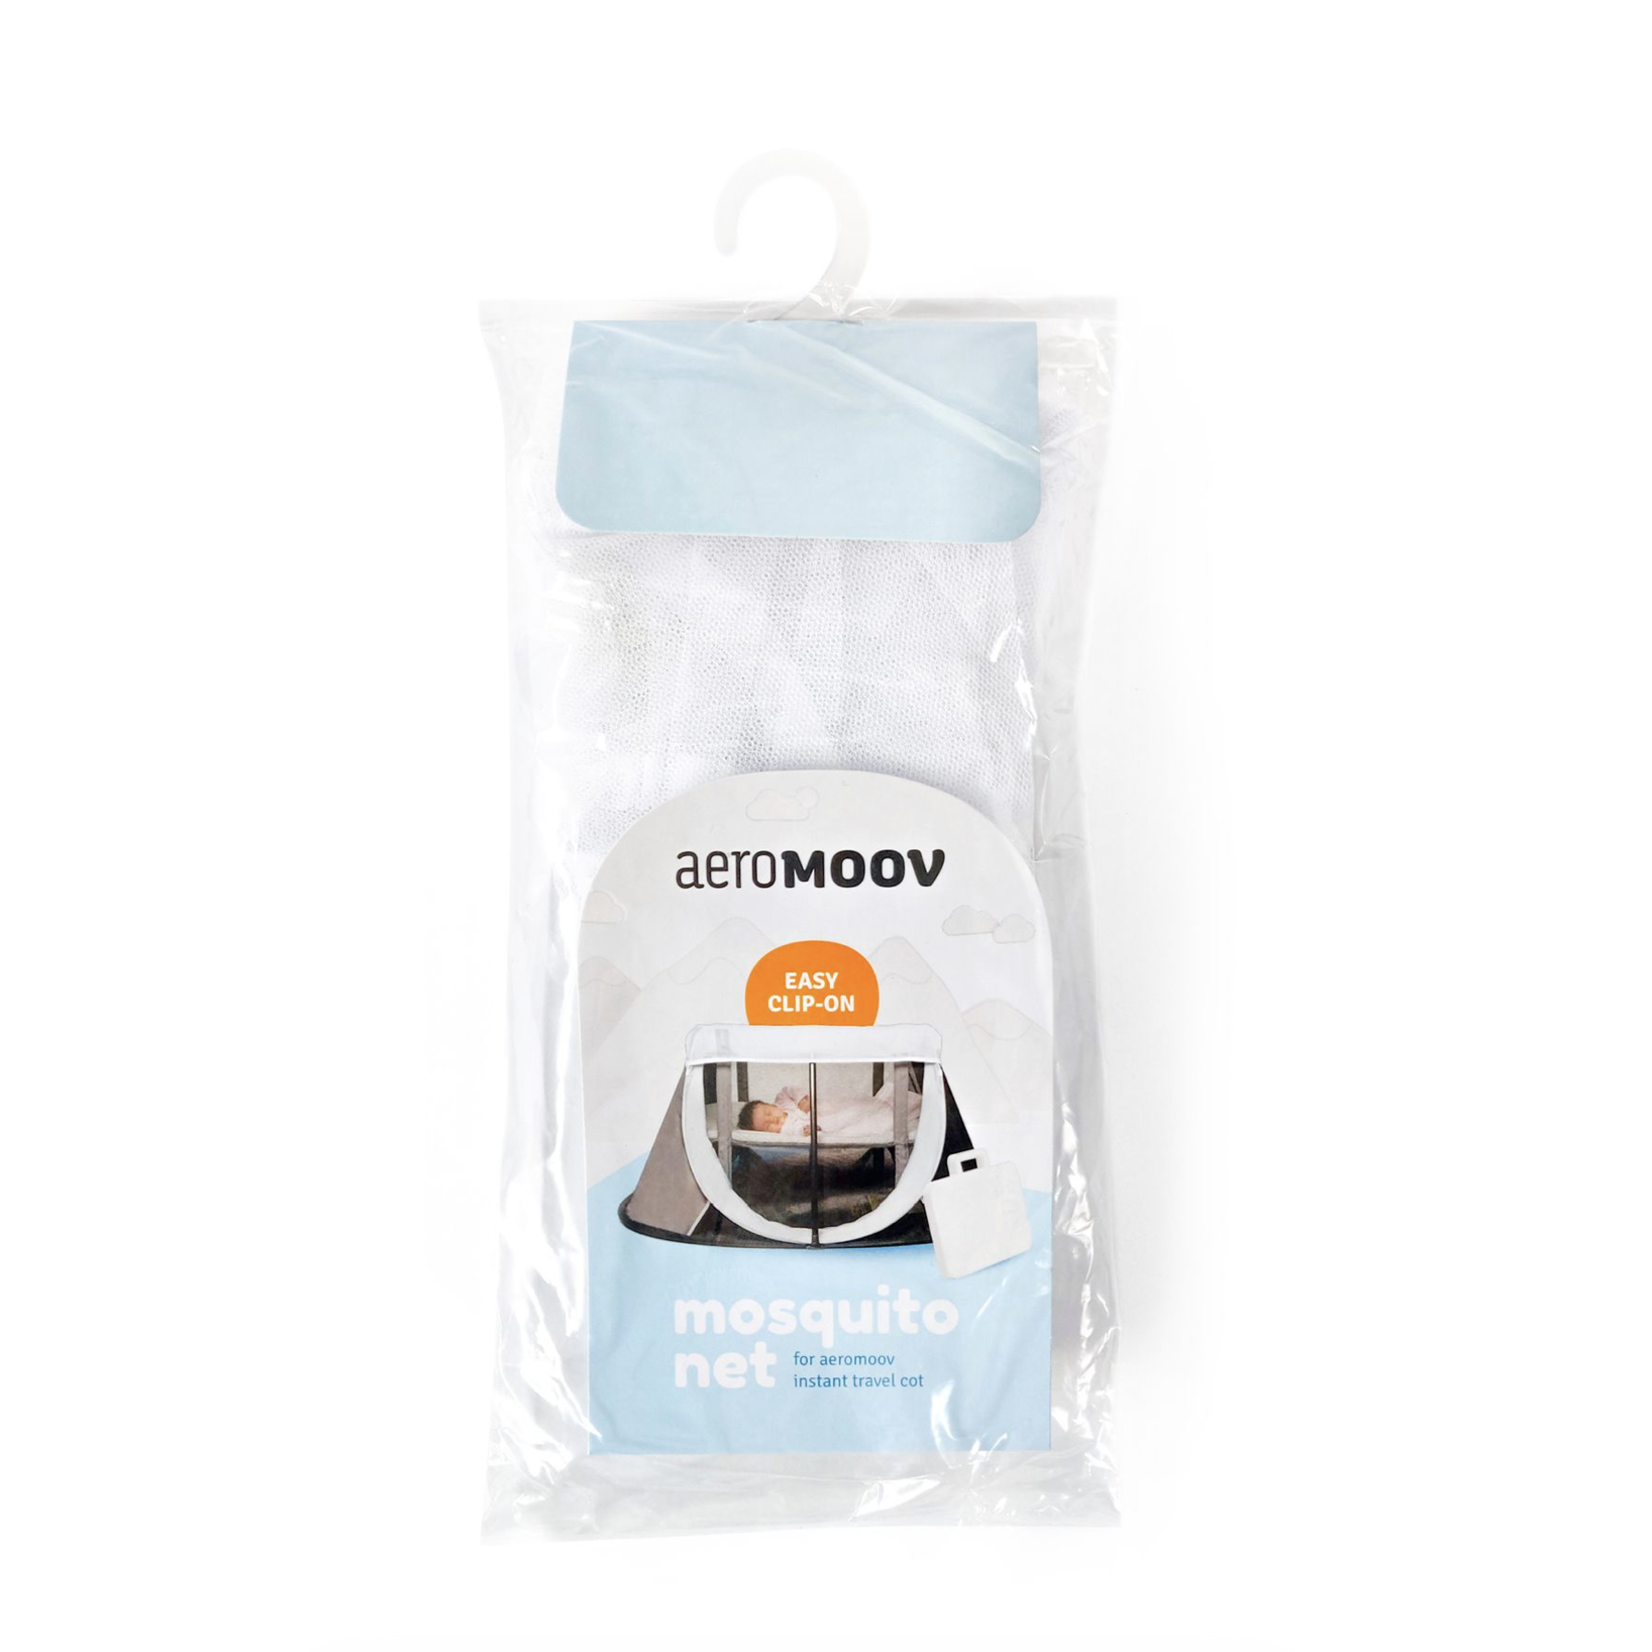 AeroMoov AeroMoov - Instant travel cot - Mosquito net